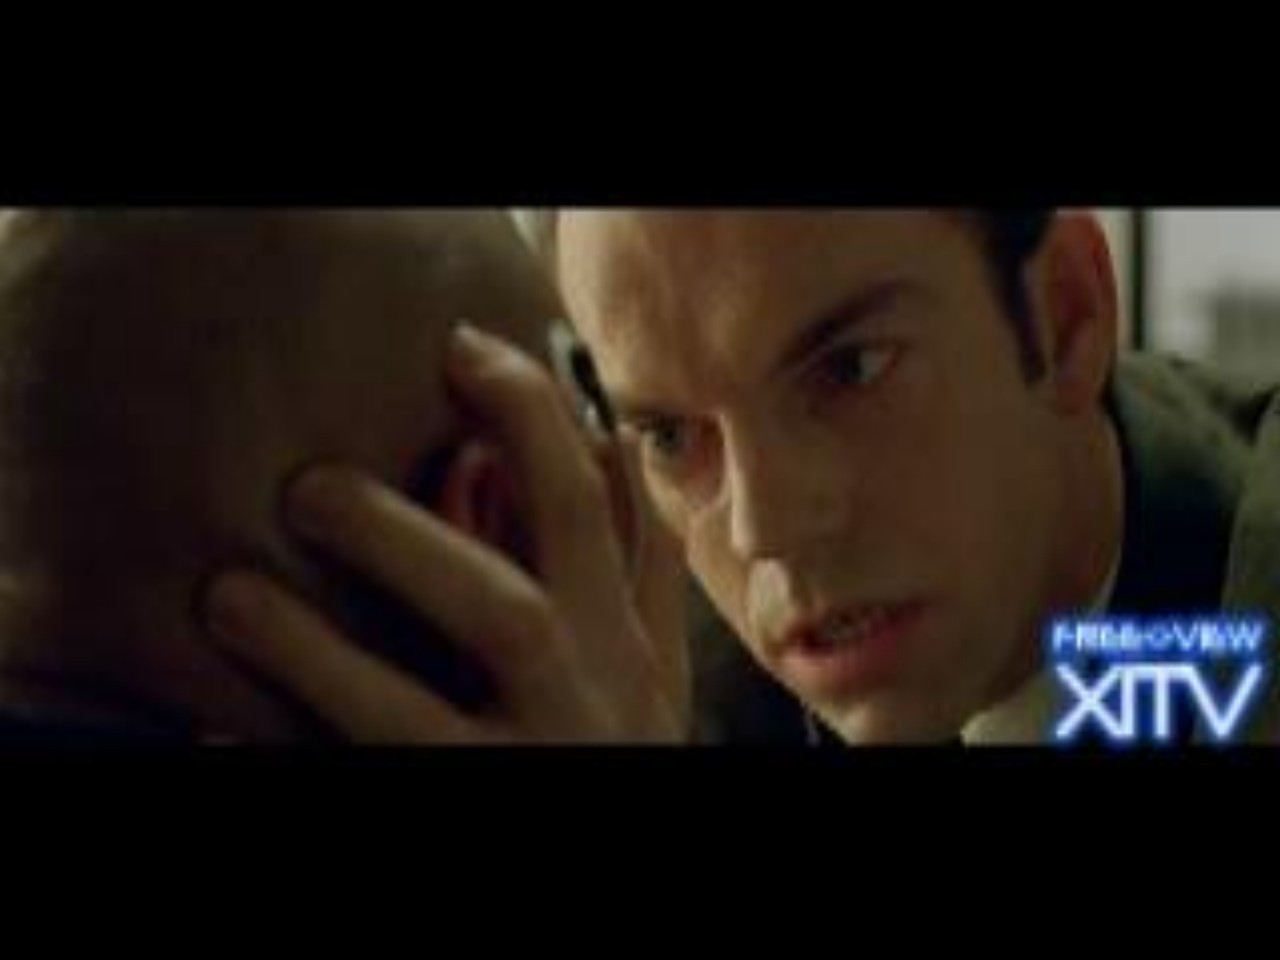 XITV FREE <> VIEW "The Matrix!"